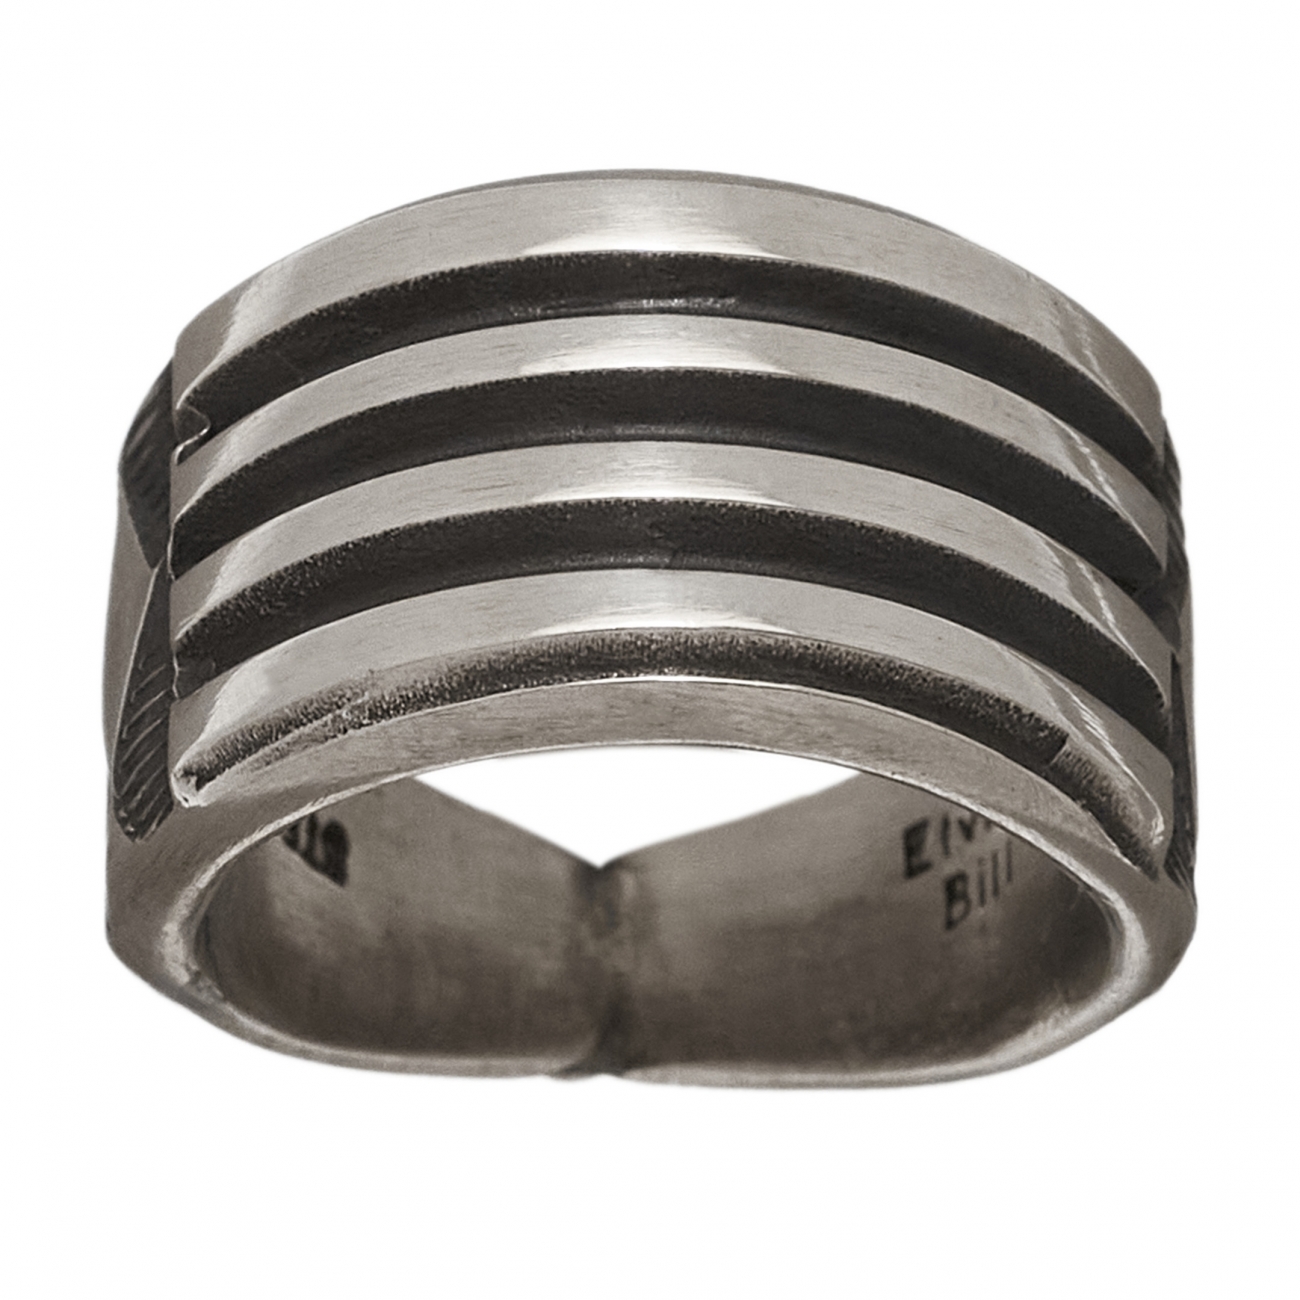 Navajo thick ring BA1181 in sterling silver for men - Harpo Paris